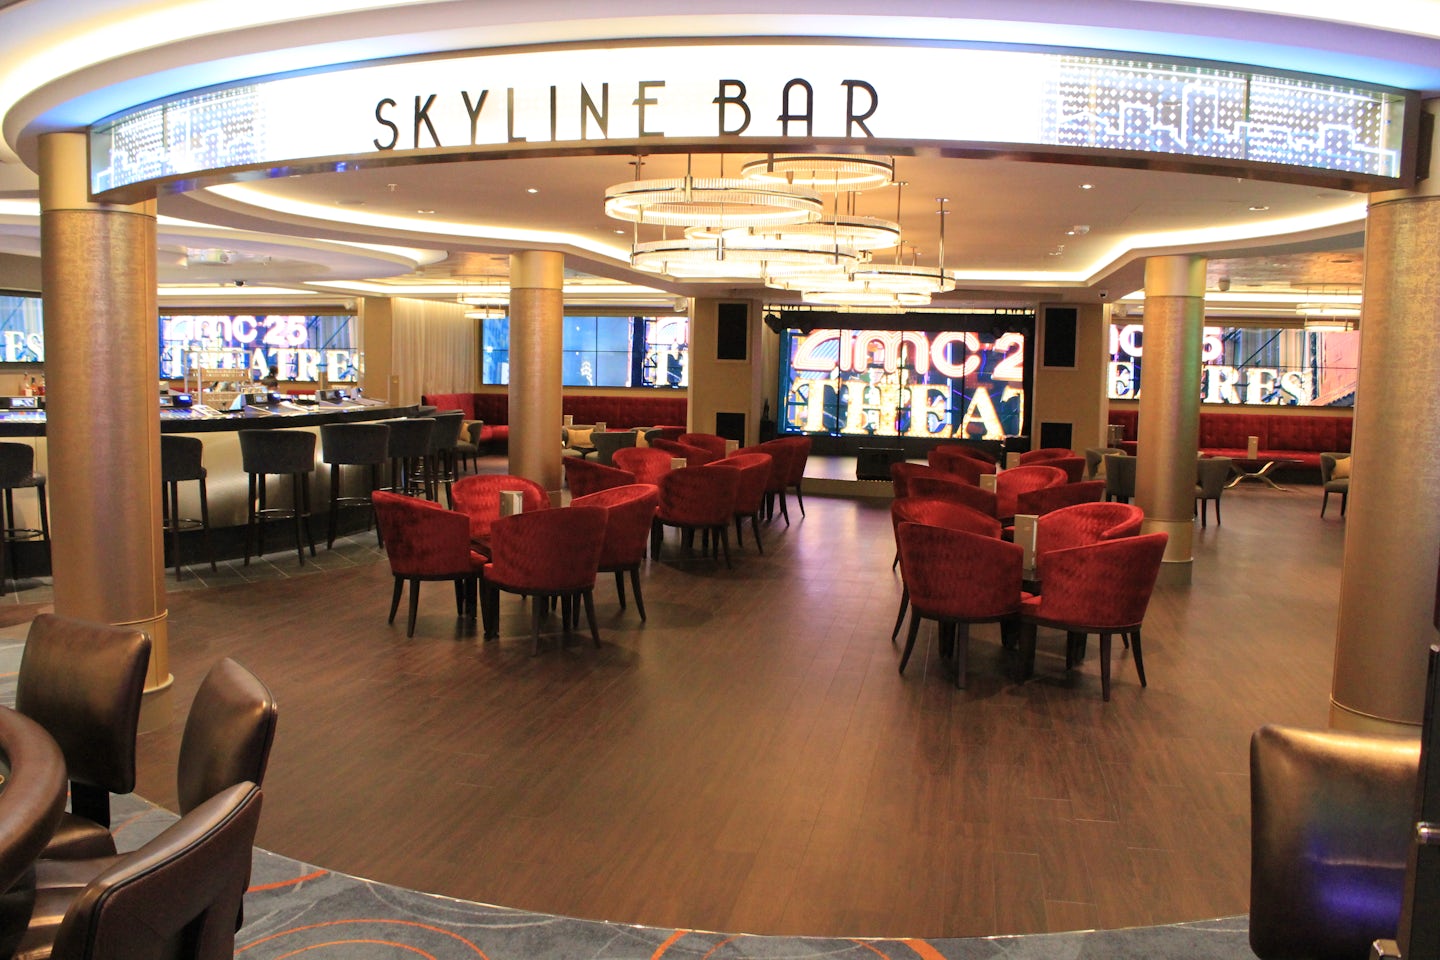 Skyline bar